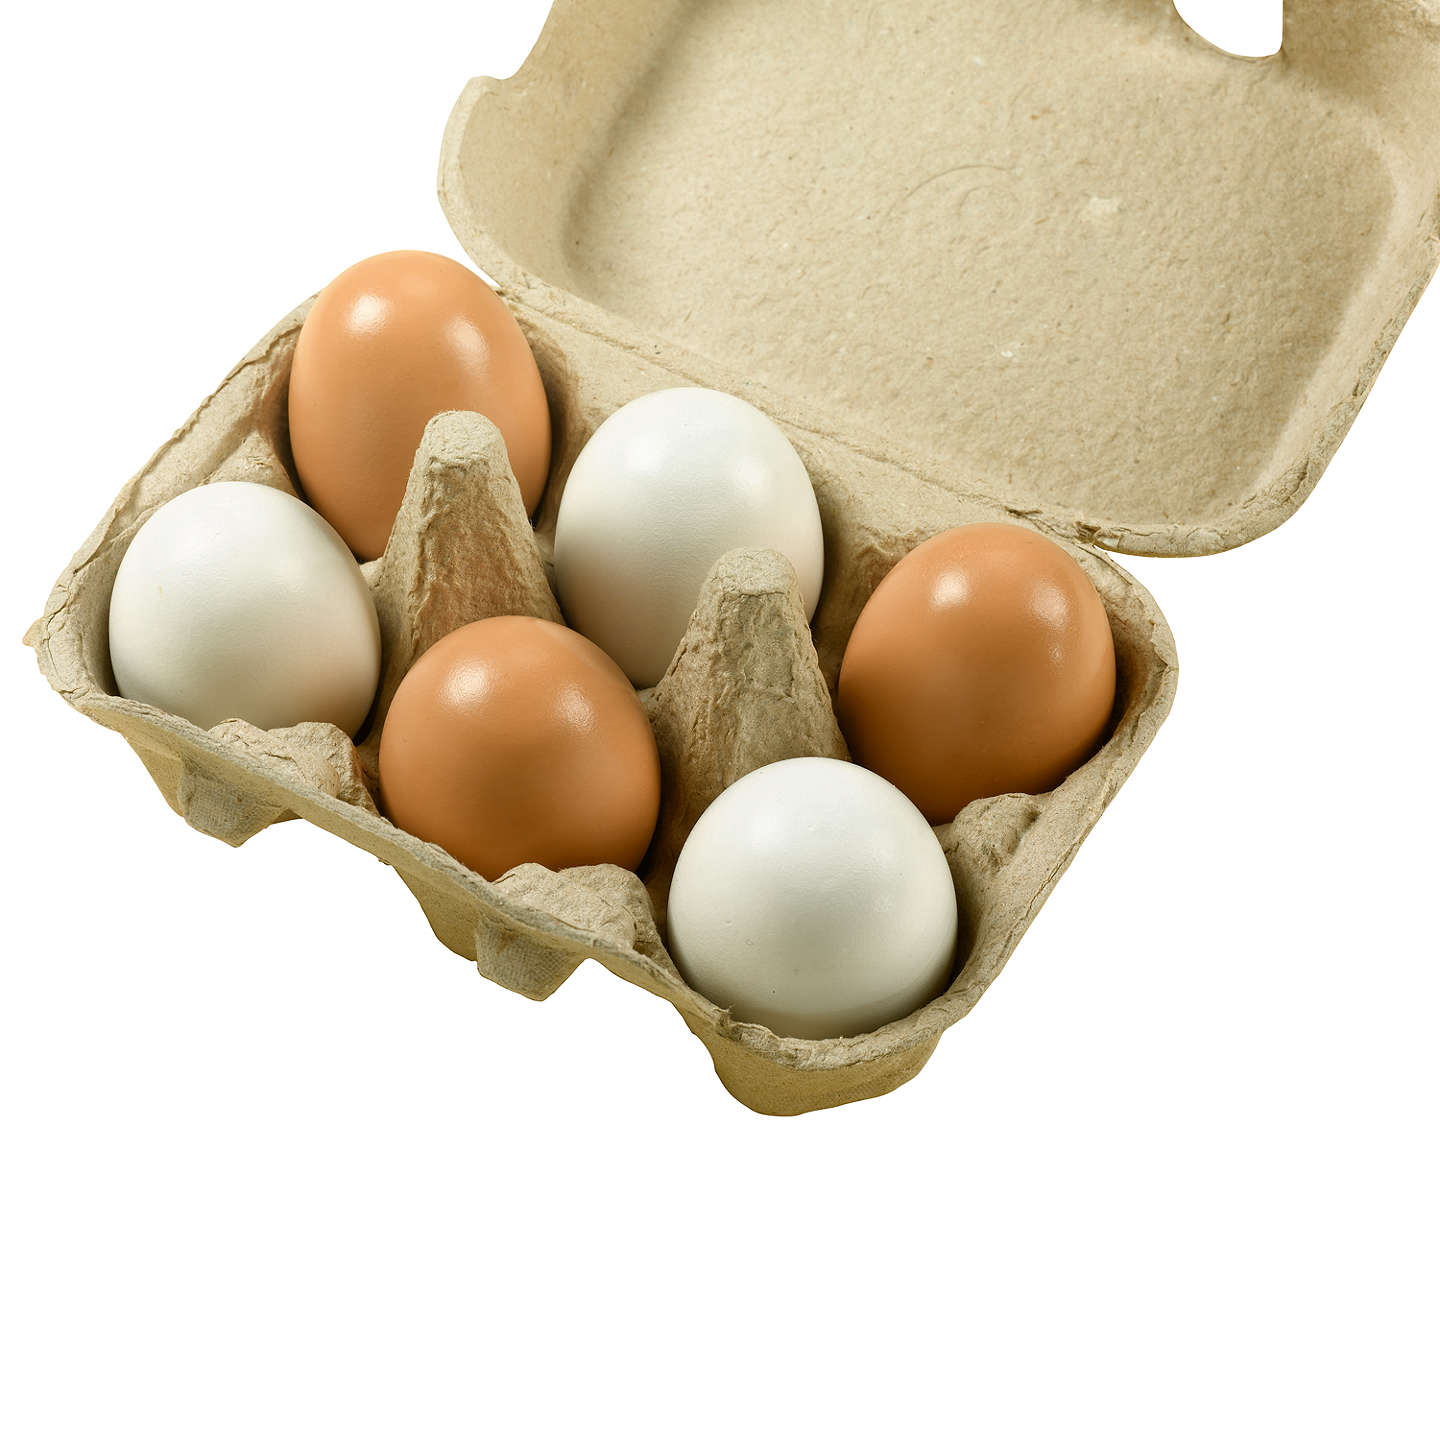 John Lewis Eggs in a Box at John Lewis